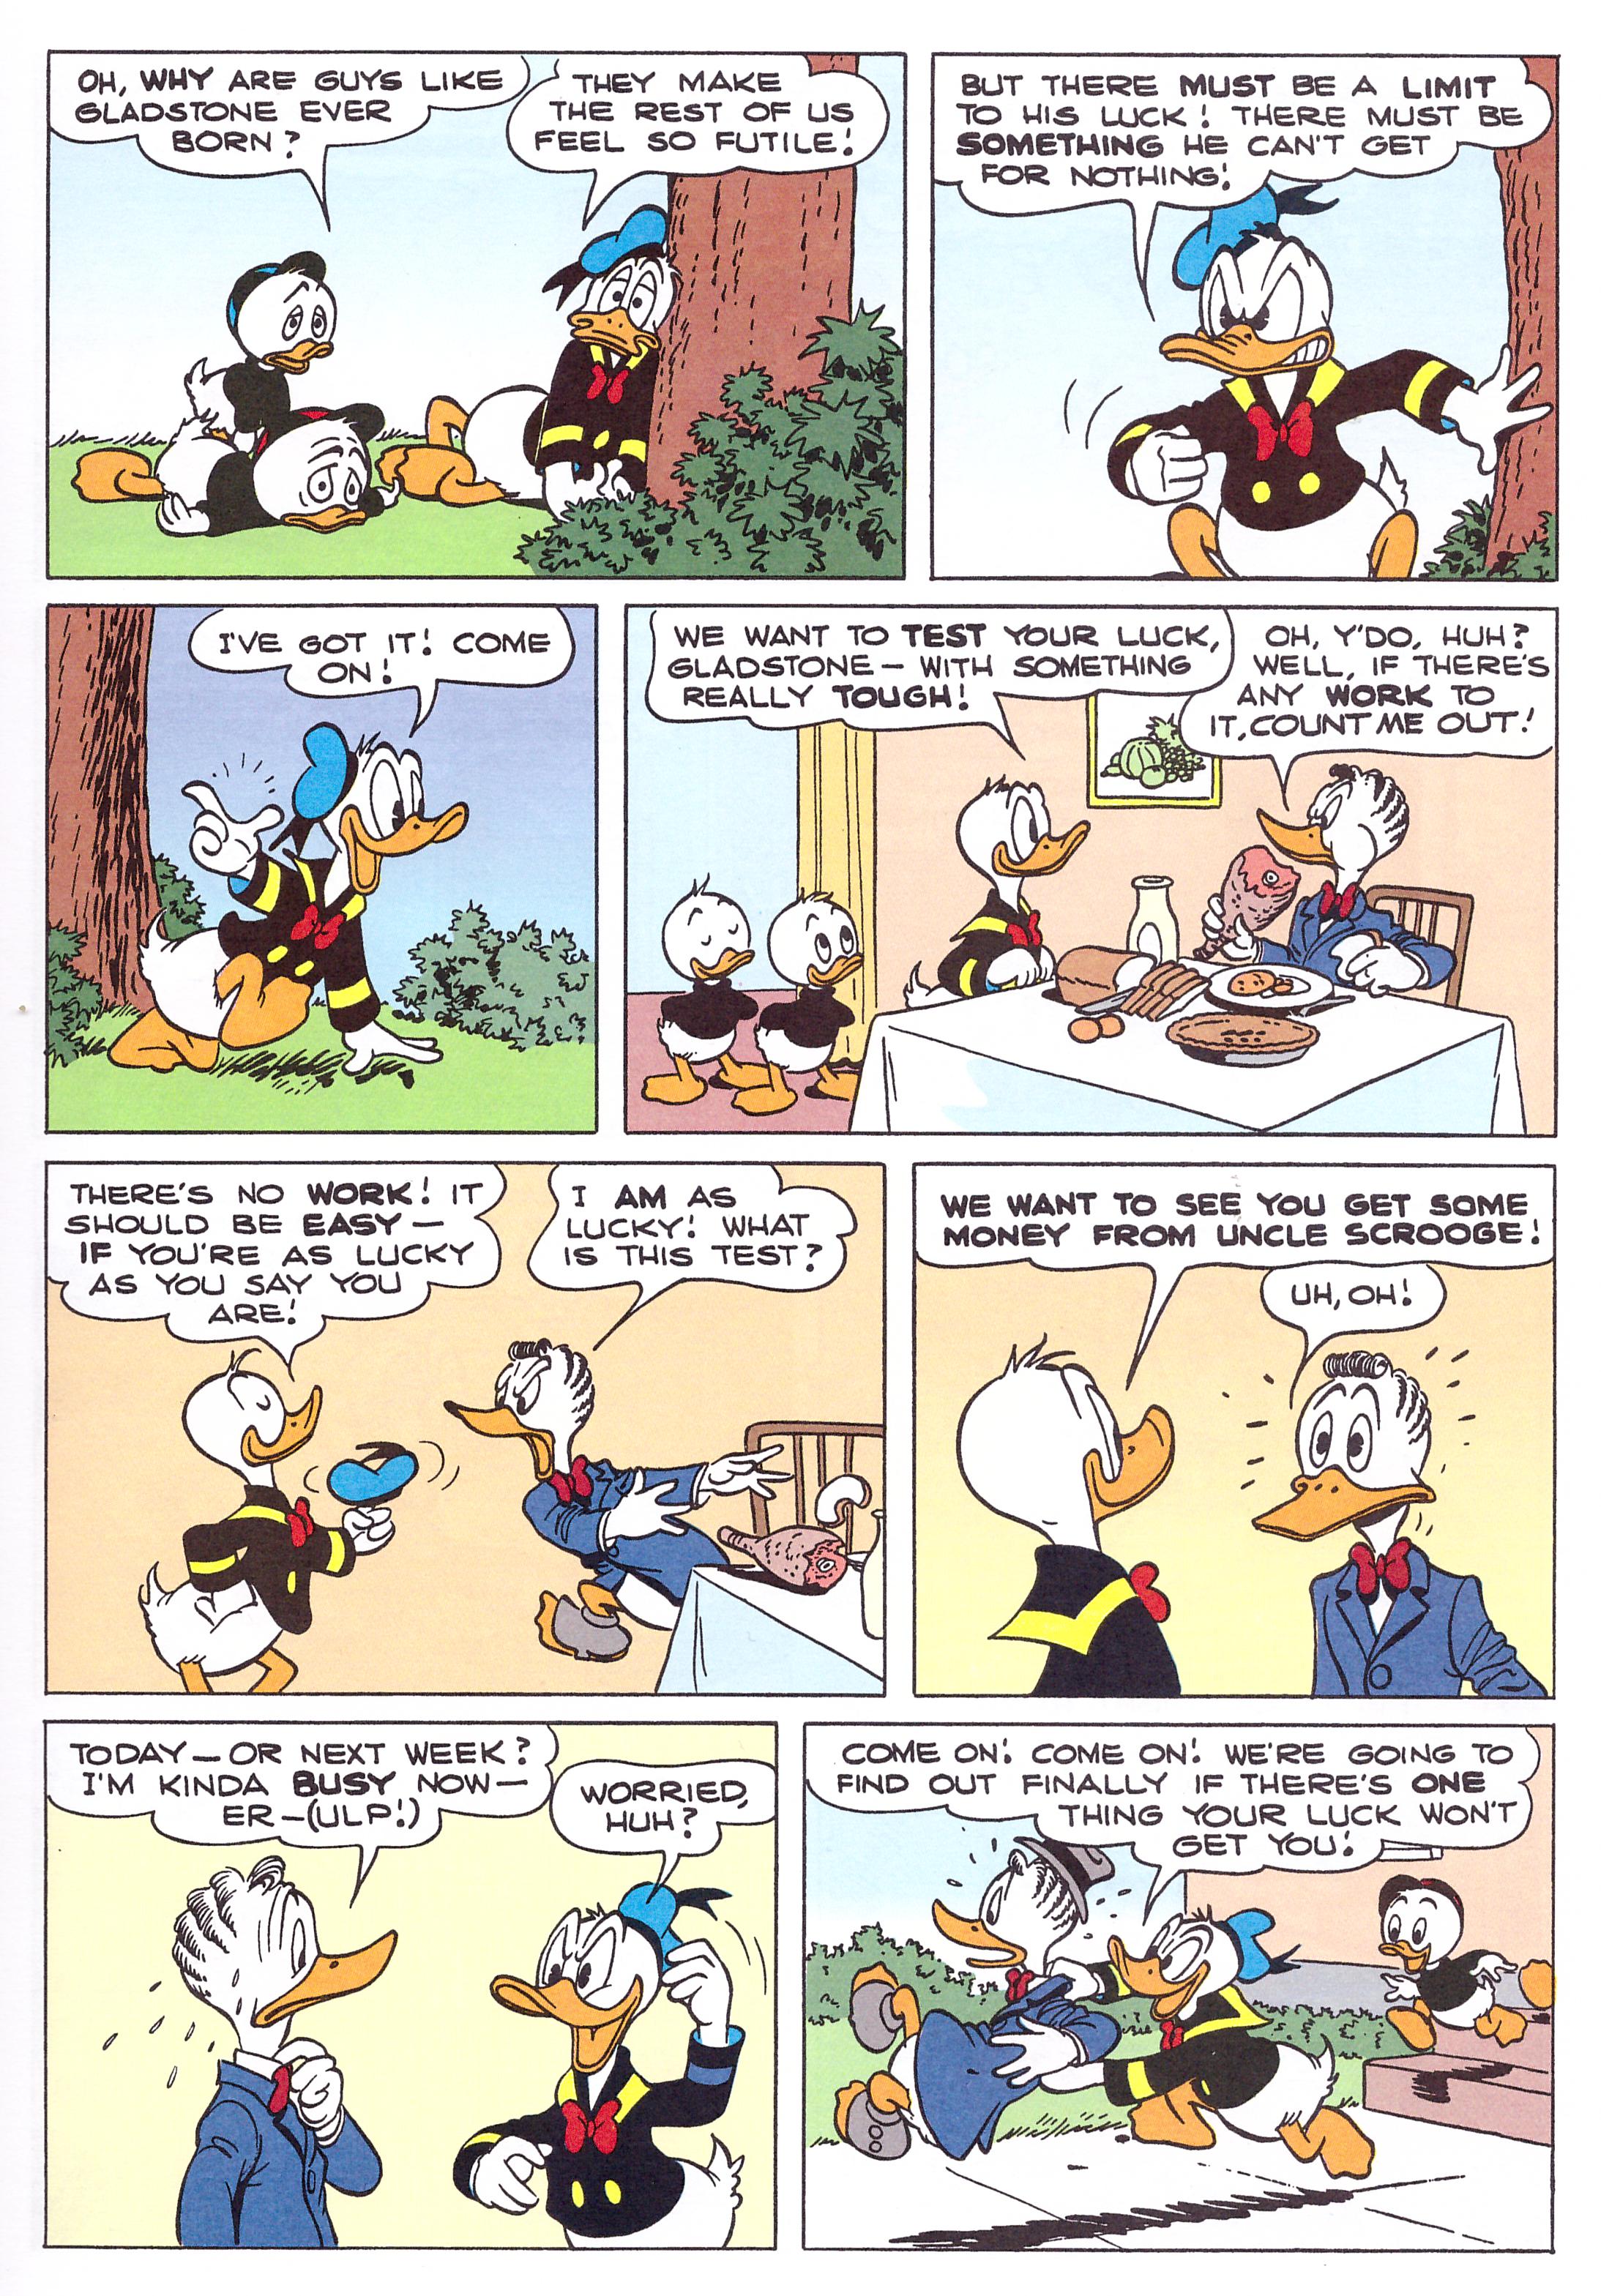 Walt Disney Comics & Stories by Carl Barks 21 review